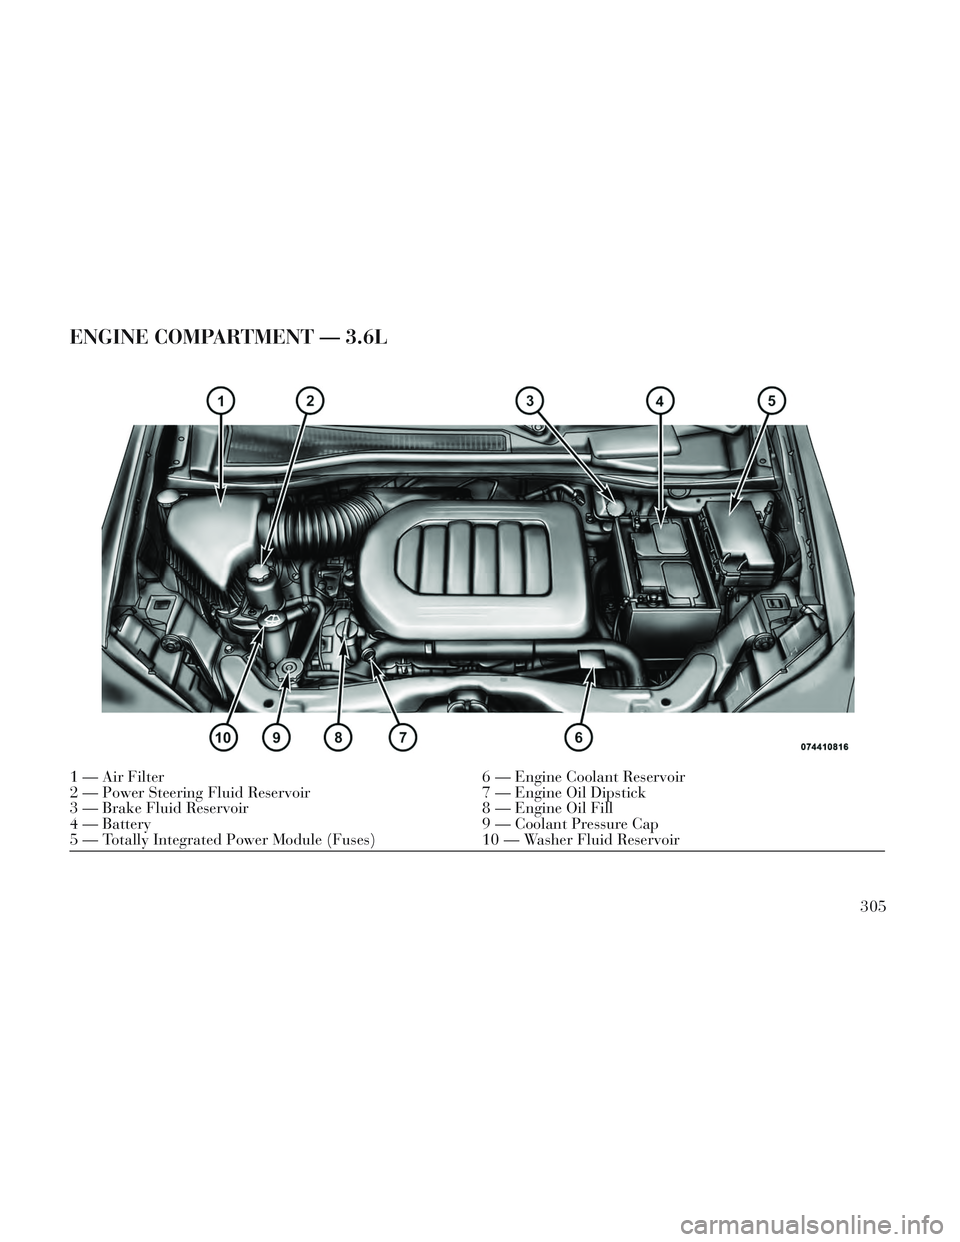 Lancia Voyager 2014  Owner handbook (in English) ENGINE COMPARTMENT — 3.6L
1 — Air Filter6 — Engine Coolant Reservoir
2 — Power Steering Fluid Reservoir 7 — Engine Oil Dipstick
3 — Brake Fluid Reservoir 8 — Engine Oil Fill
4 — Batter